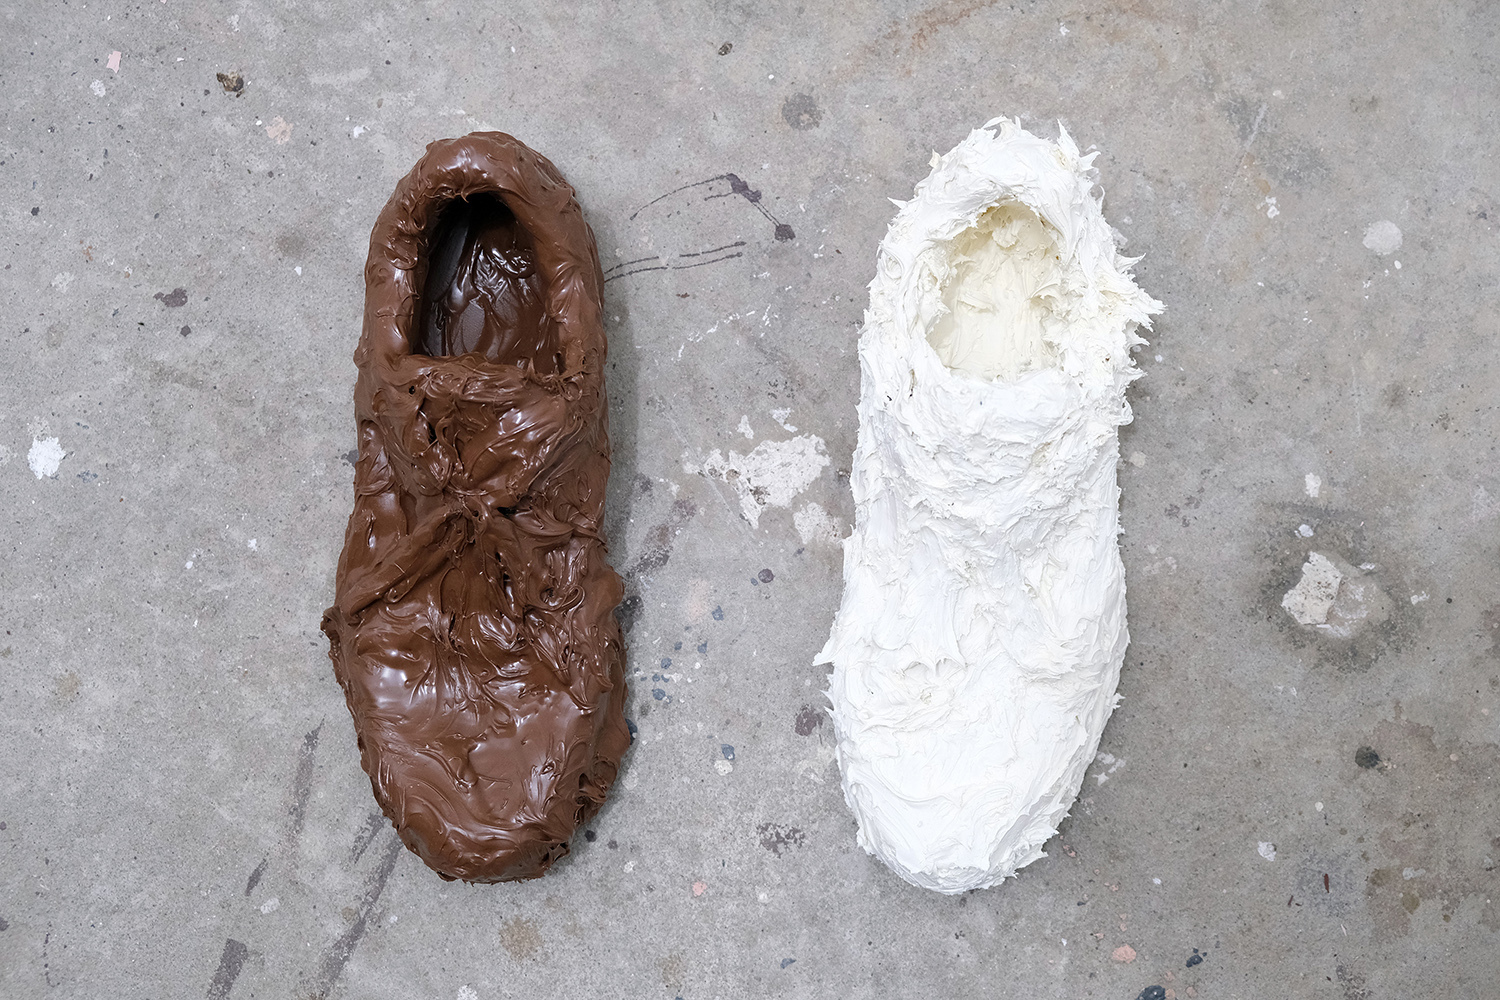 Thomas Rentmeister, 2021, Saucony Kivara, Shoes, Nutella, Penaten Cream, 33 x 34 x 14 cm, 2